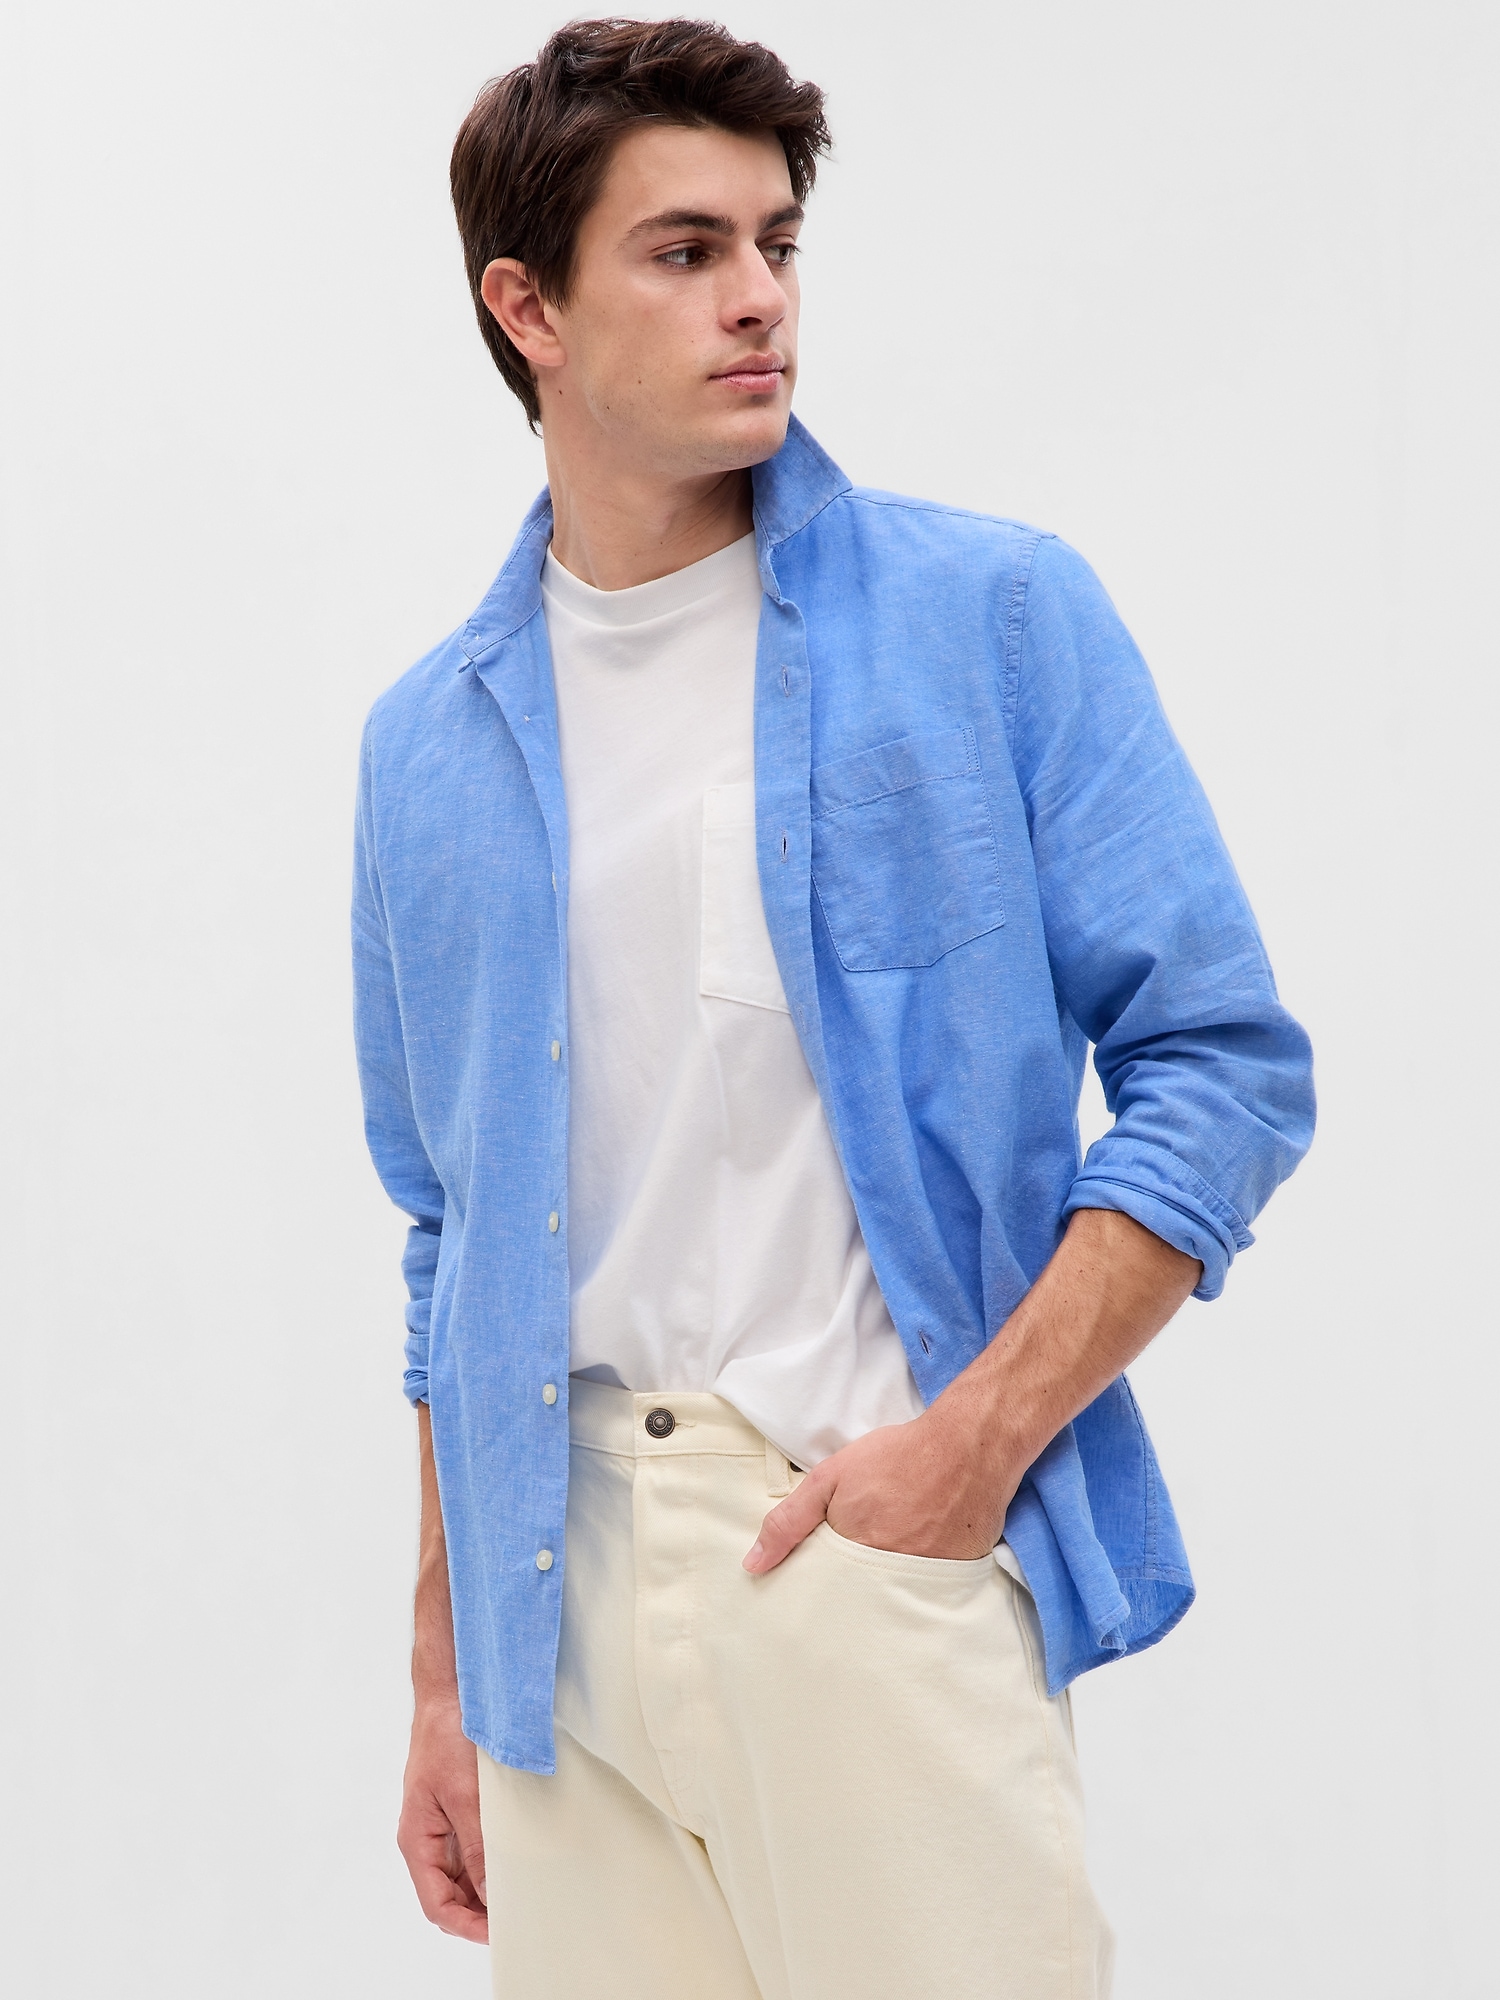 Buy Gap Linen-Cotton Long Sleeve Shirt from the Gap online shop